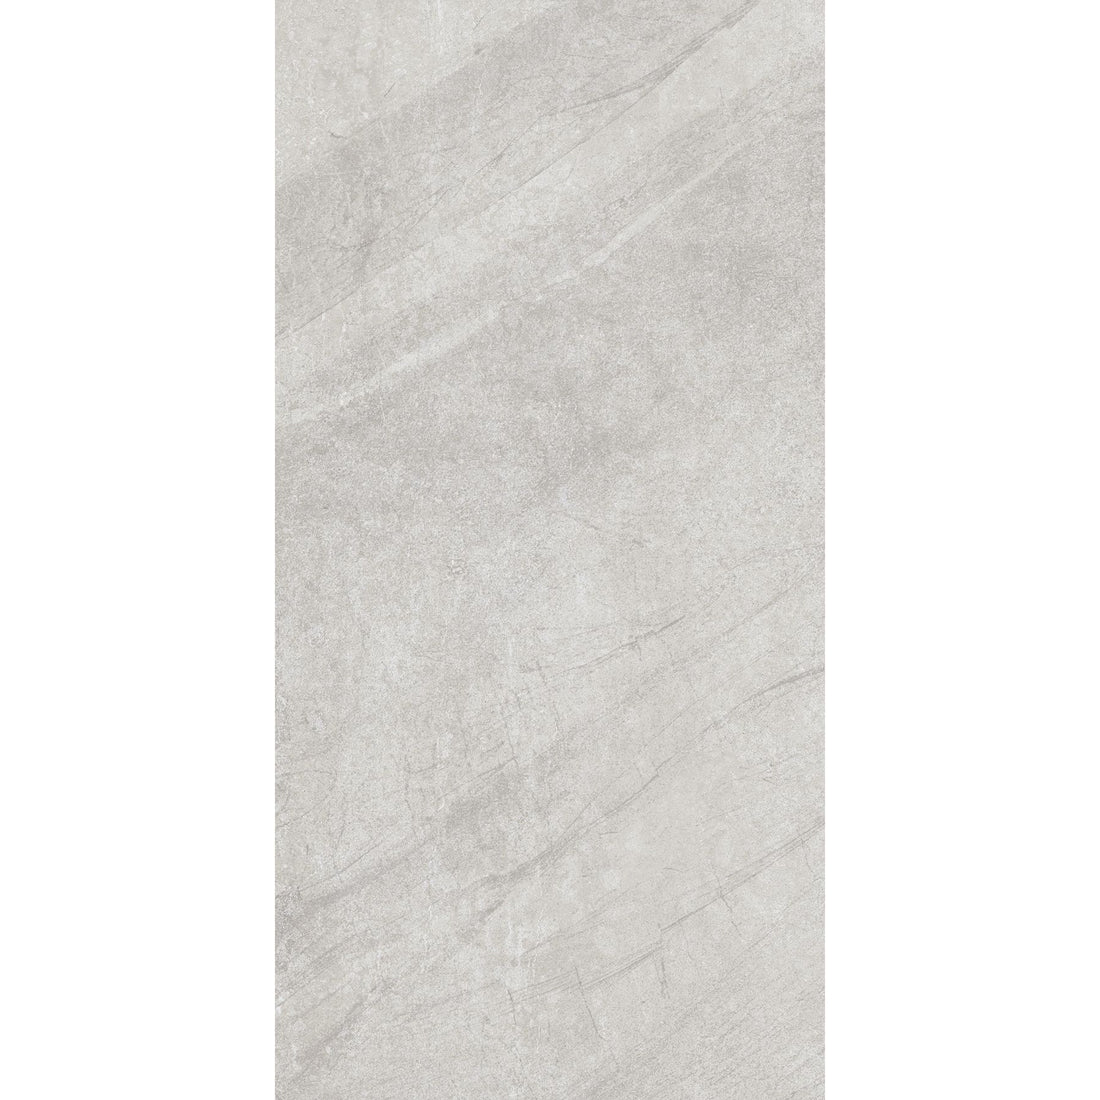 Cosmopol Beige Ceramic Wall Tile - 30 x 60cm